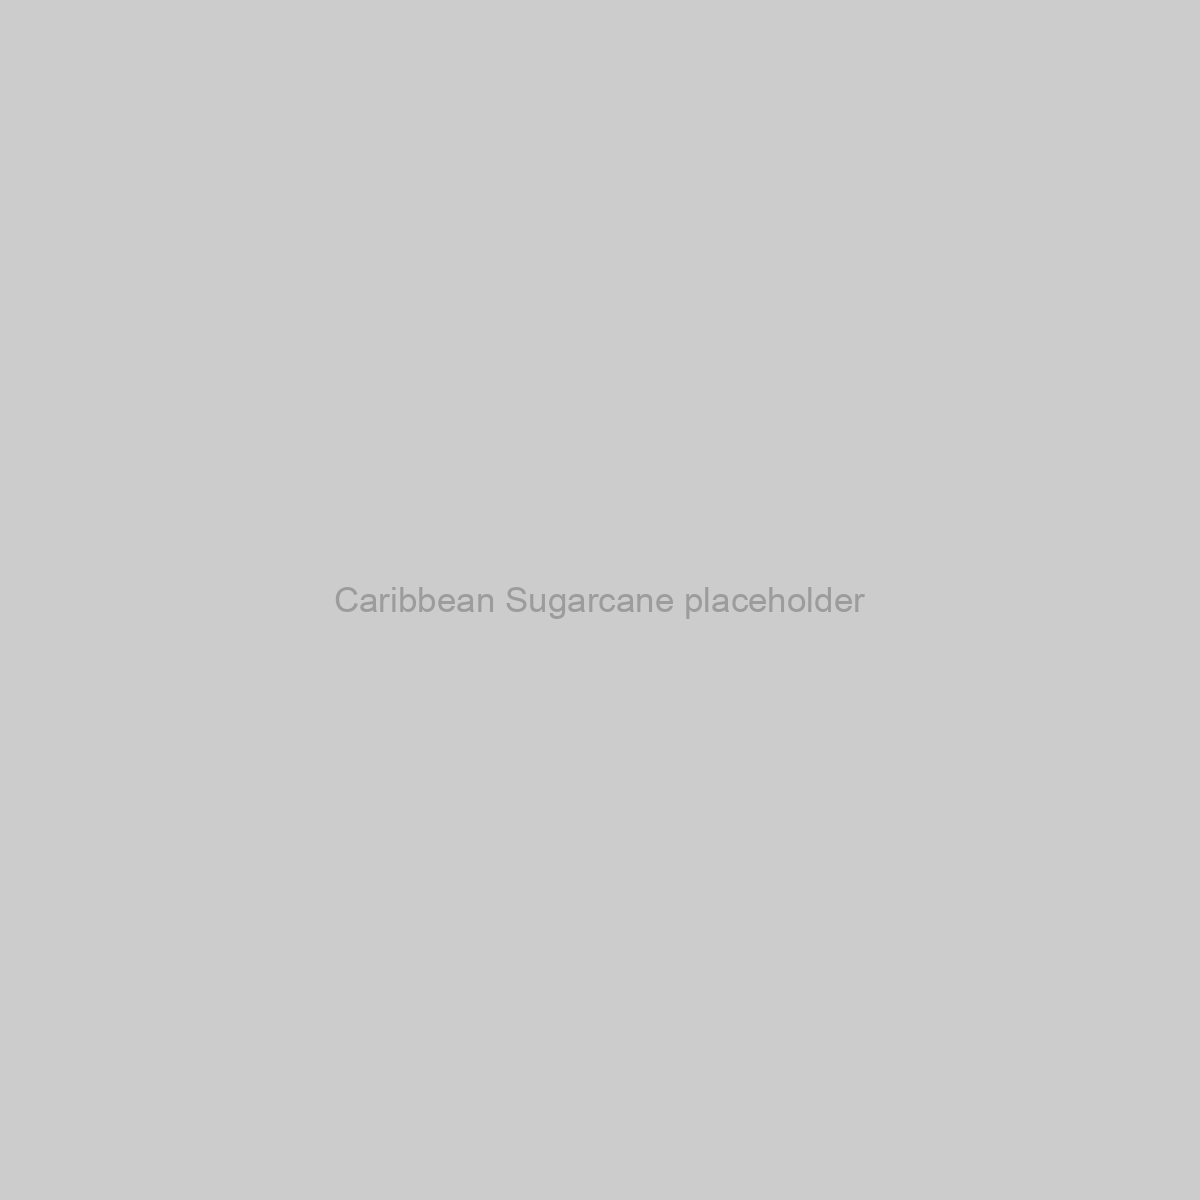 Caribbean Sugarcane Placeholder Image